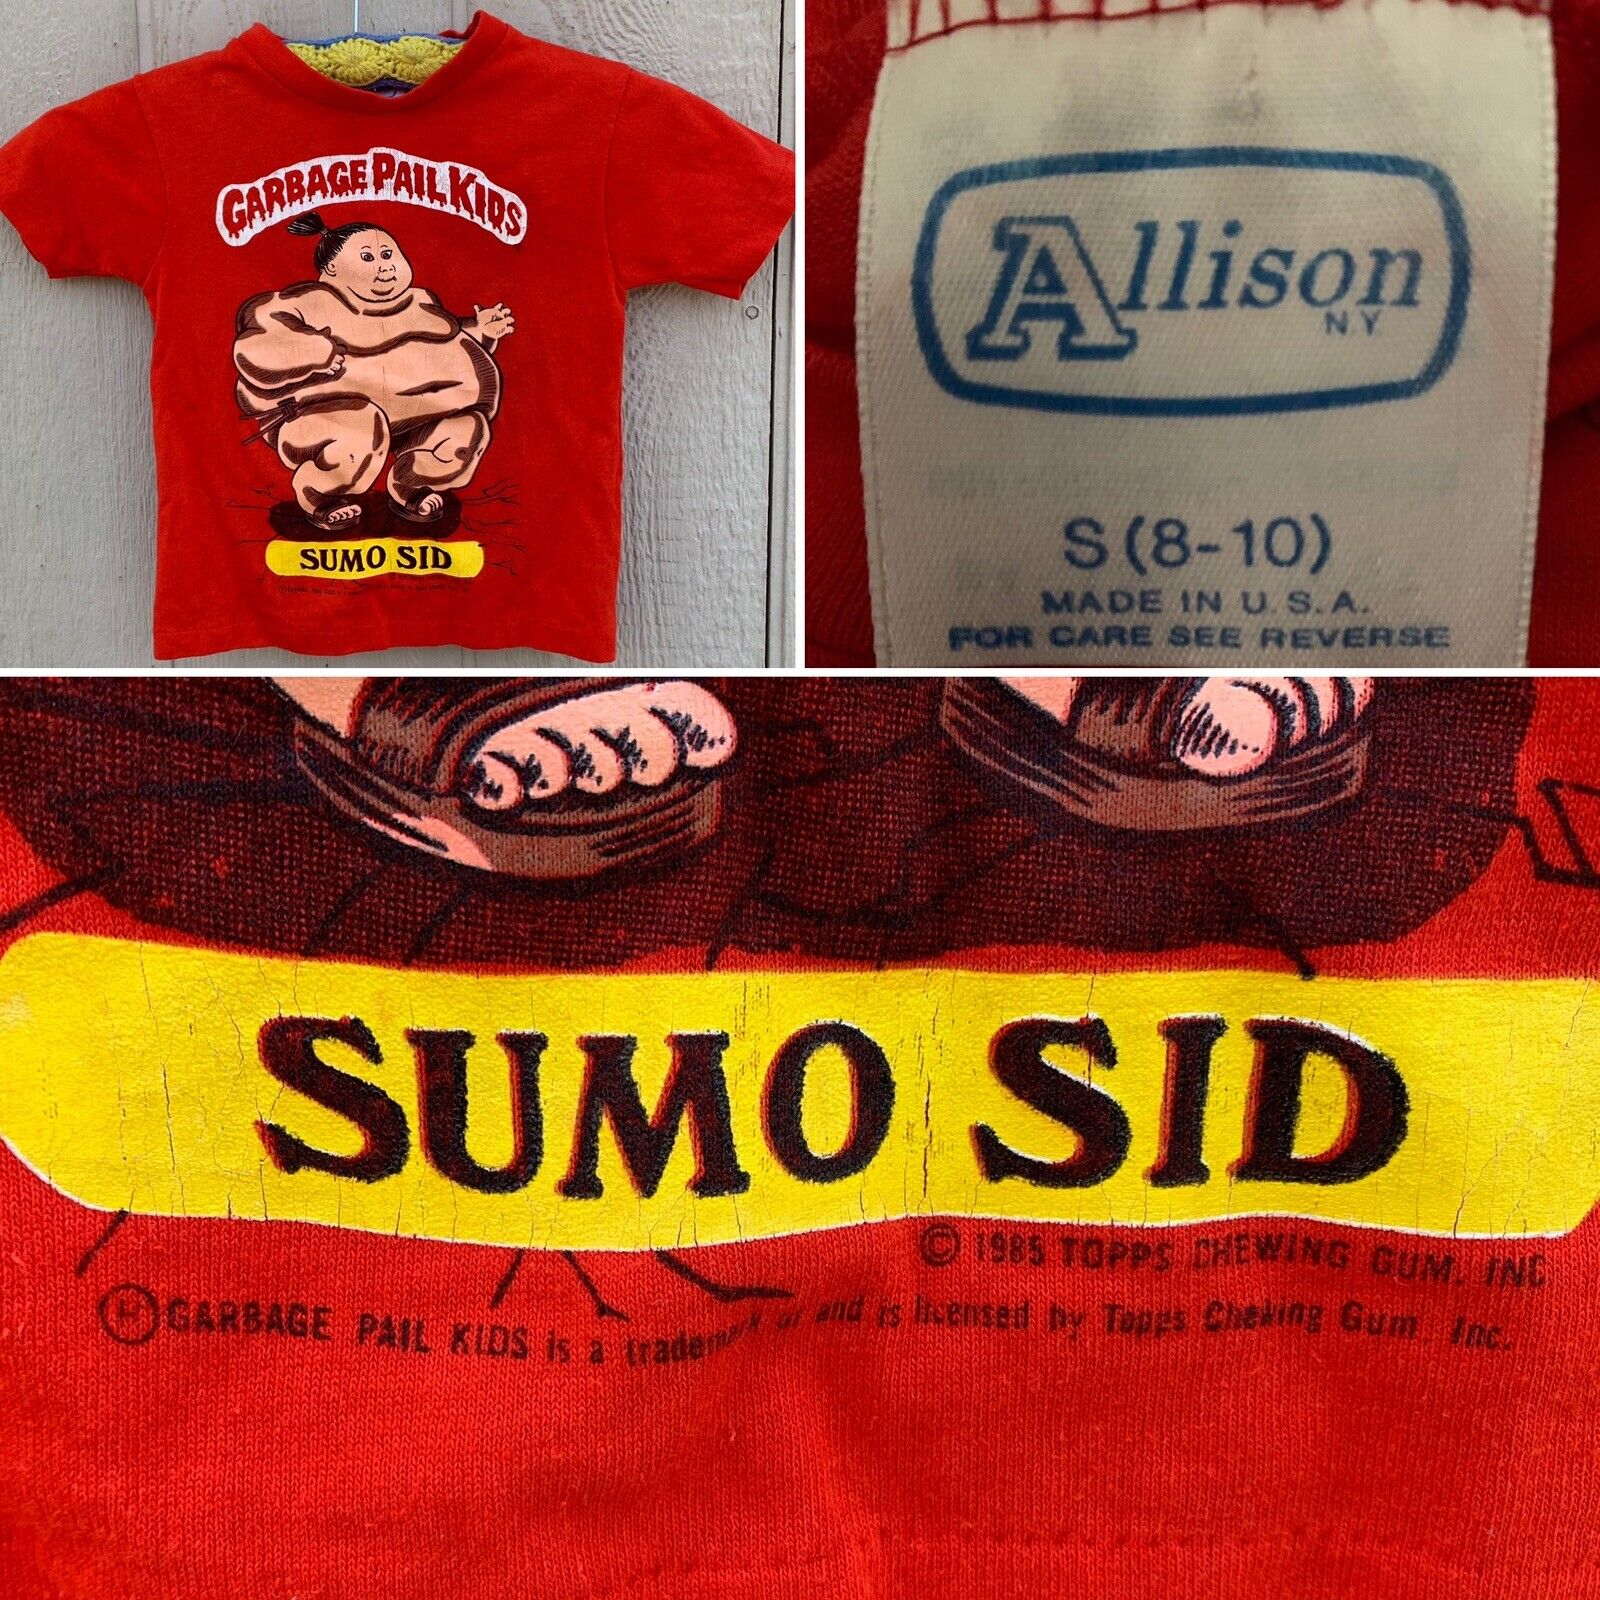 Vintage Garbage Pail Kids SUMO SID t-shirt c 1985 Topps Chewing Gum Inc S 8-10